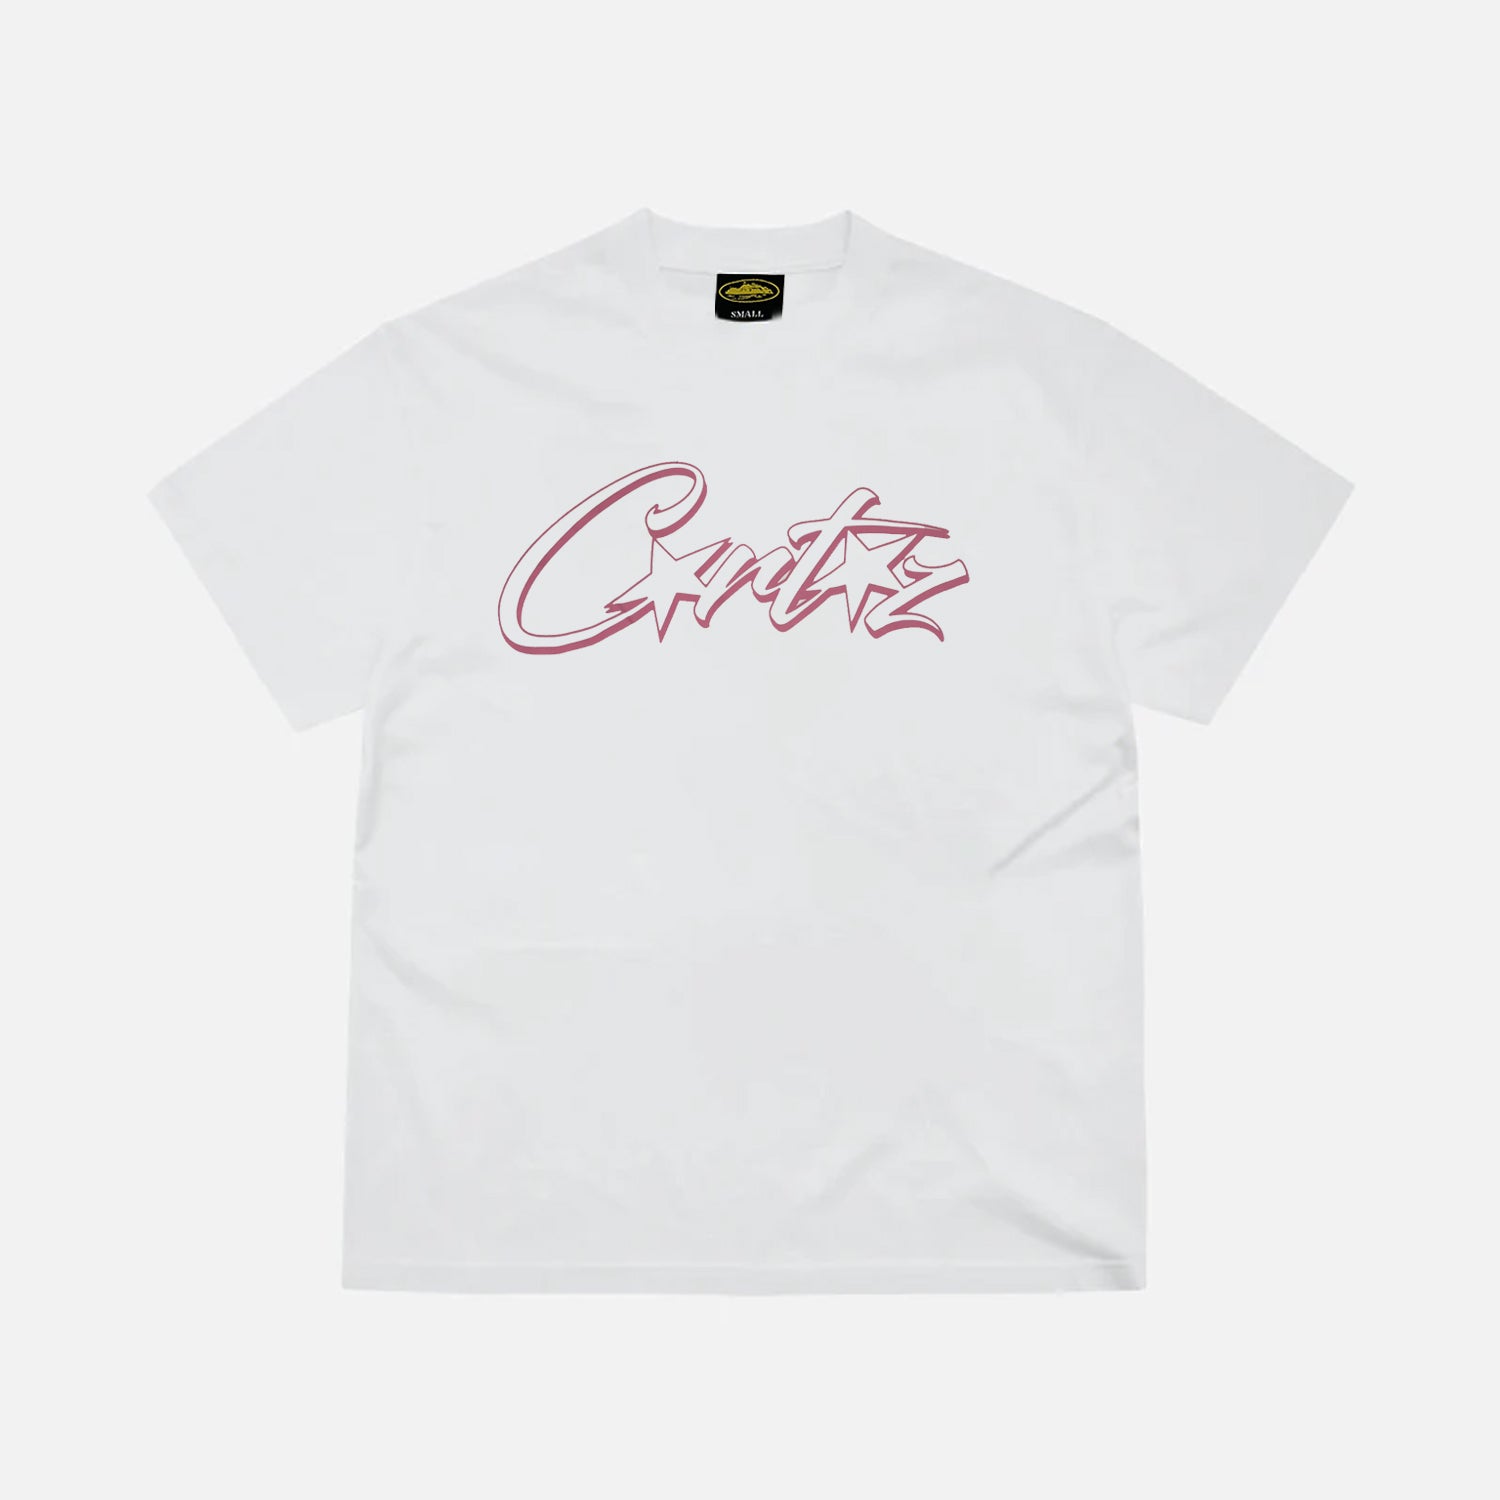 Corteiz RTW Allstarz T-Shirt - White / Pink